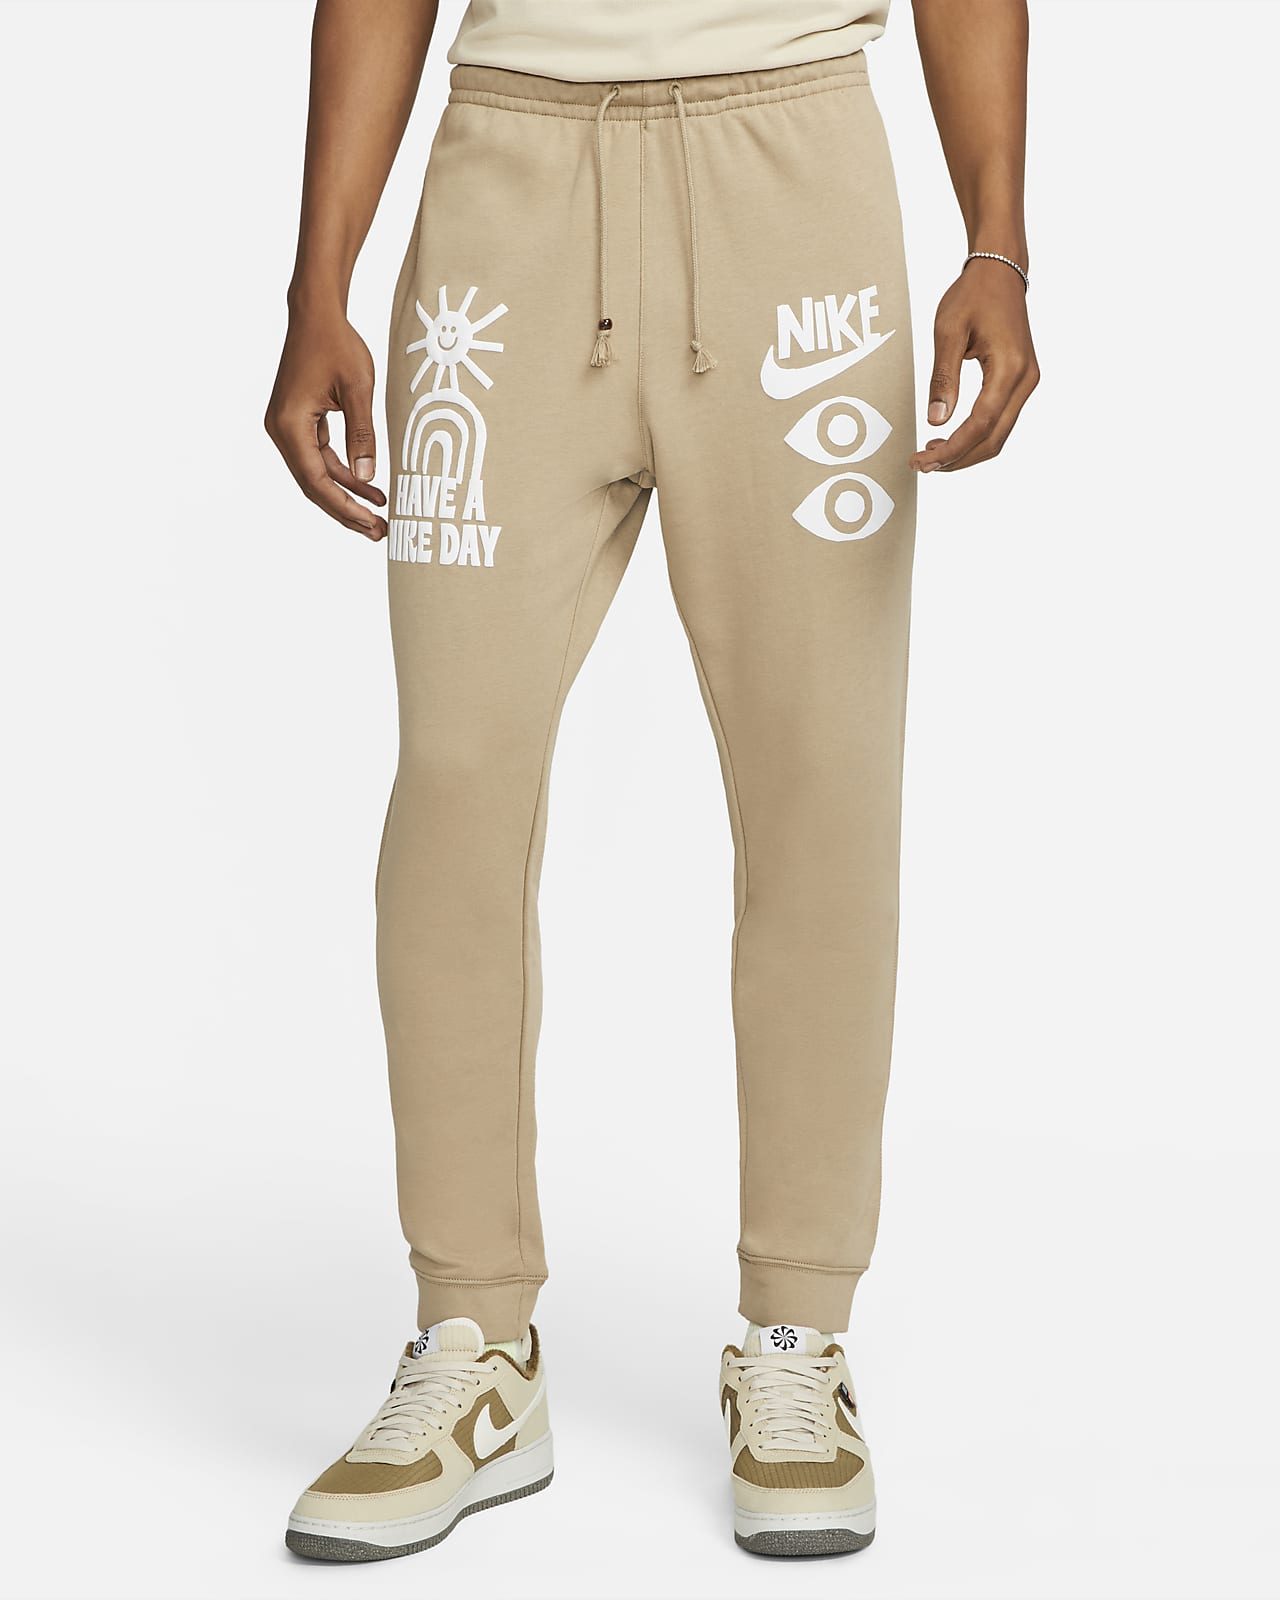 Nike Sportswear Men's French Terry Pants